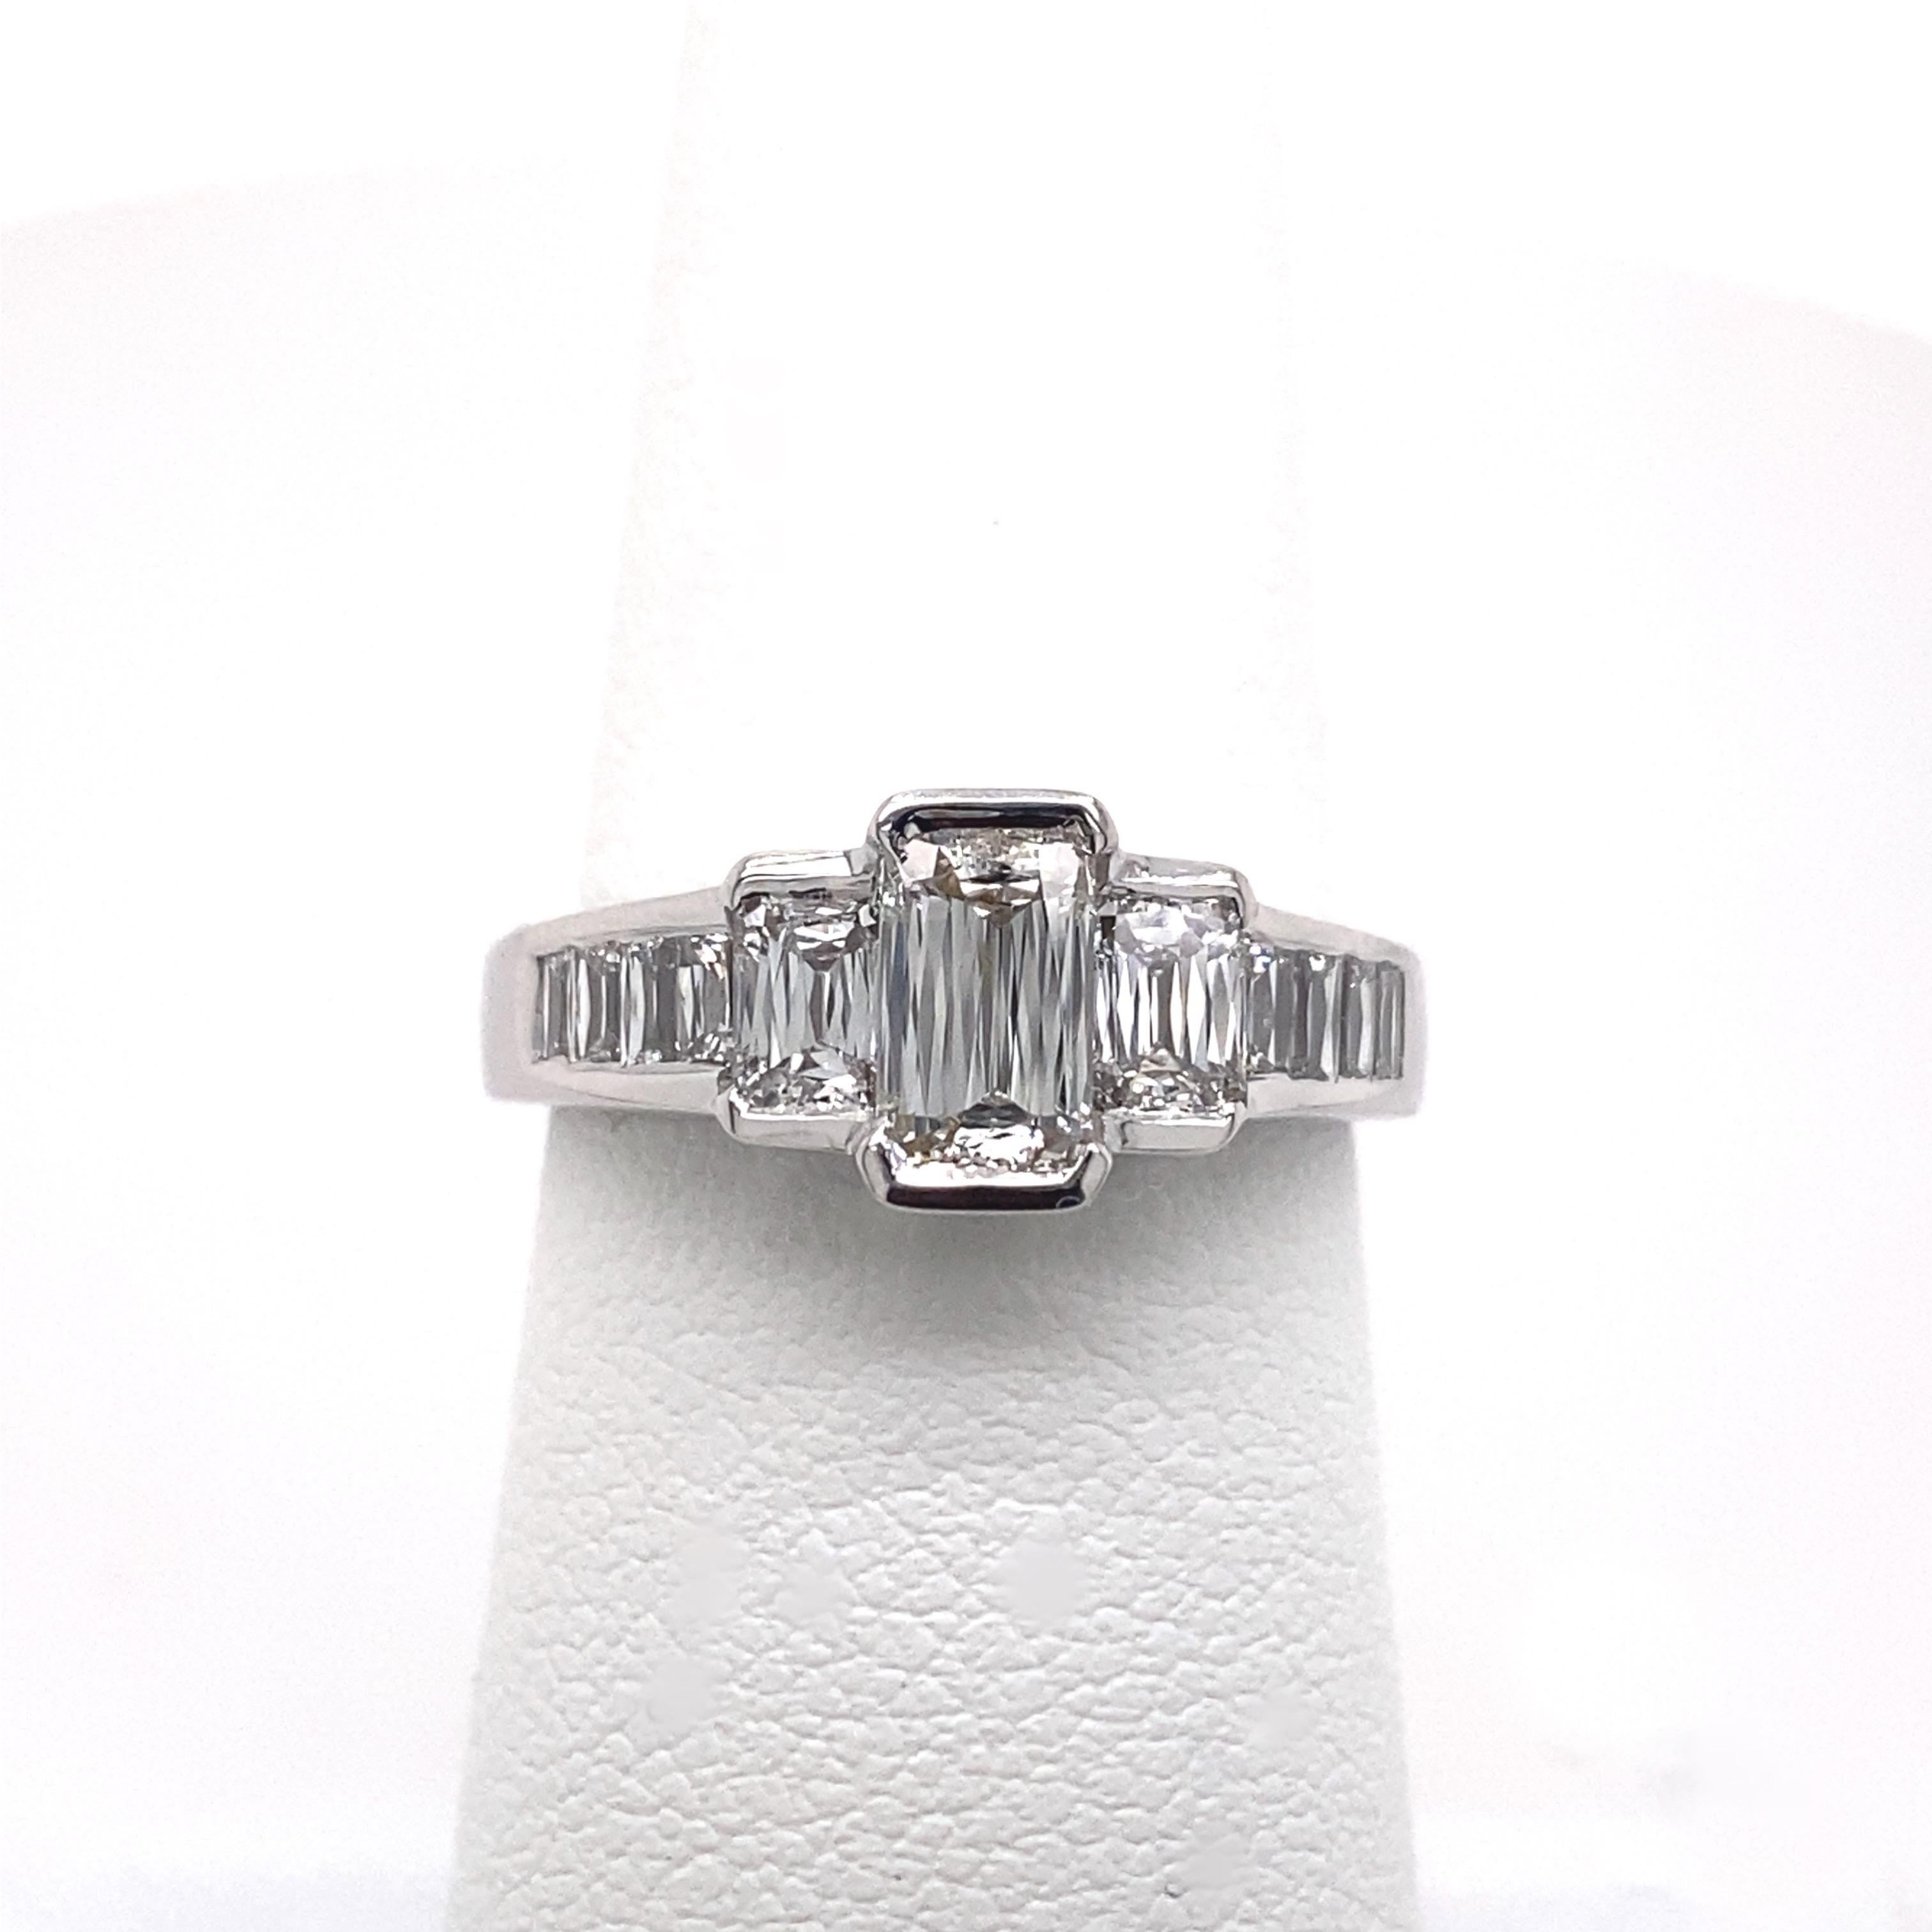 Emerald Cut Christopher Designs CRISSCUT Diamond L'Amour Engagement Ring 1.75 tcw 18kt WG For Sale